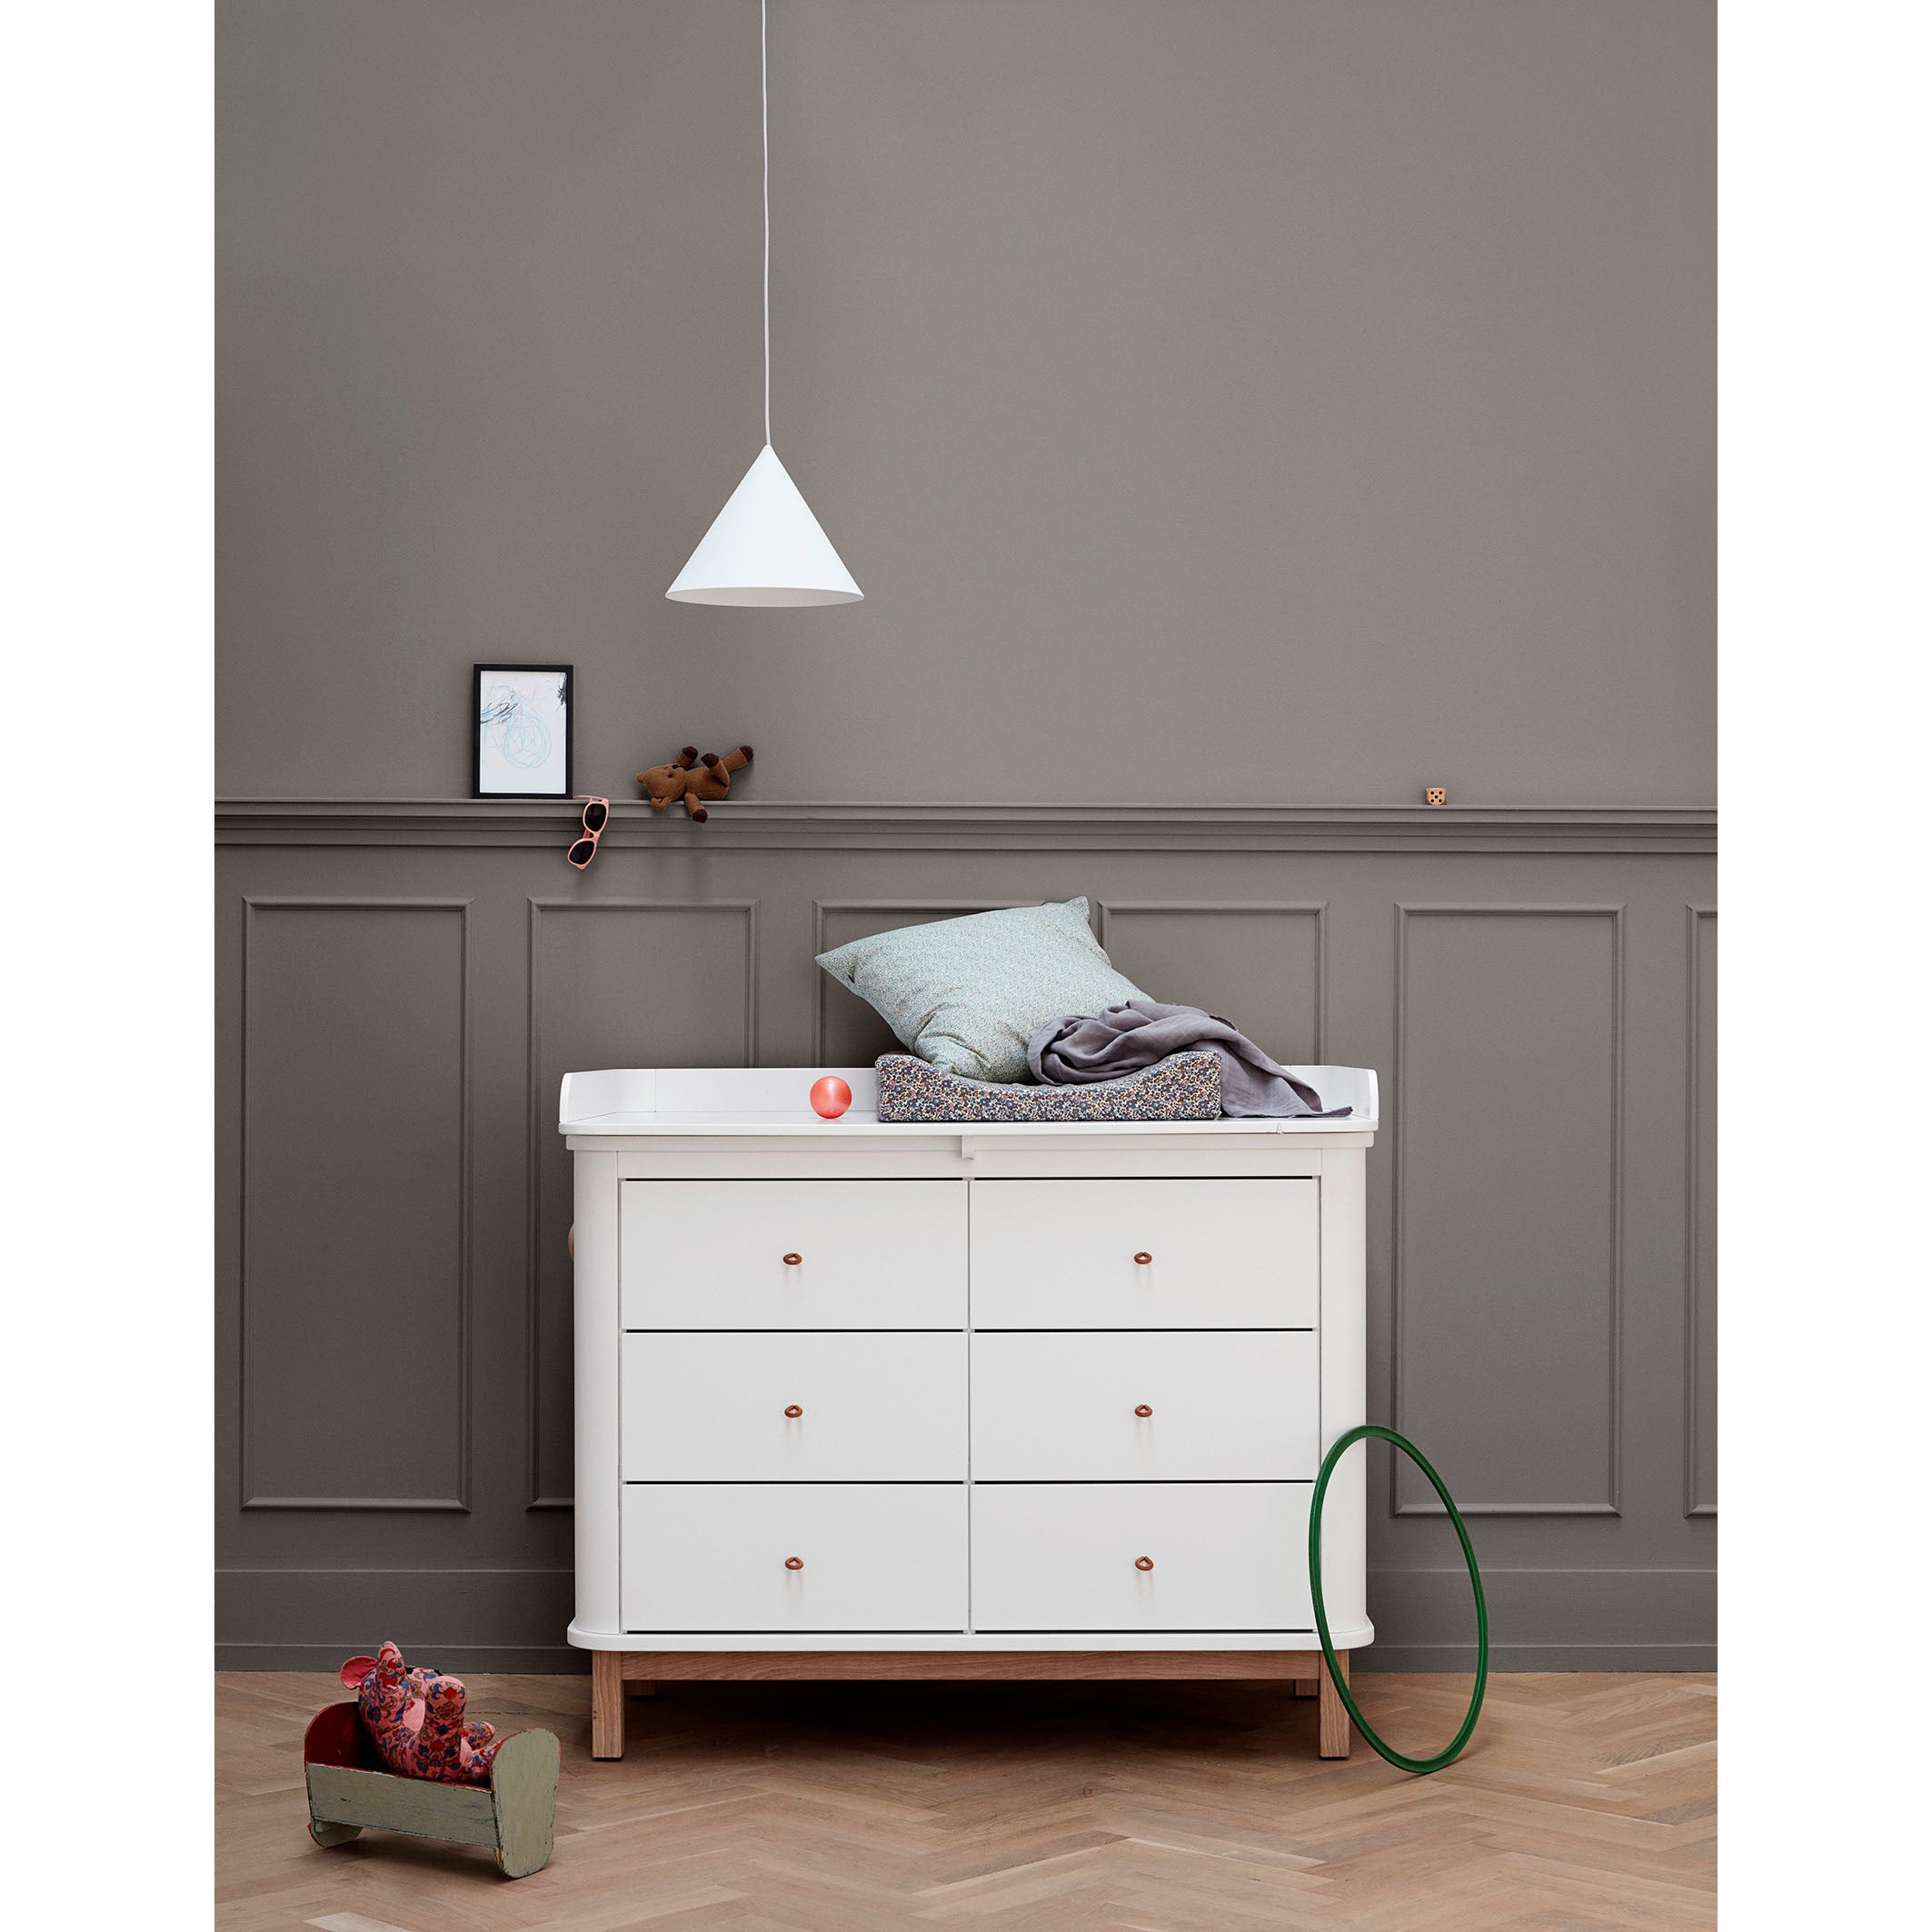 oliver-furniture-wood-nursery-plate-large-white-for-dresser-6-drawers- (4)